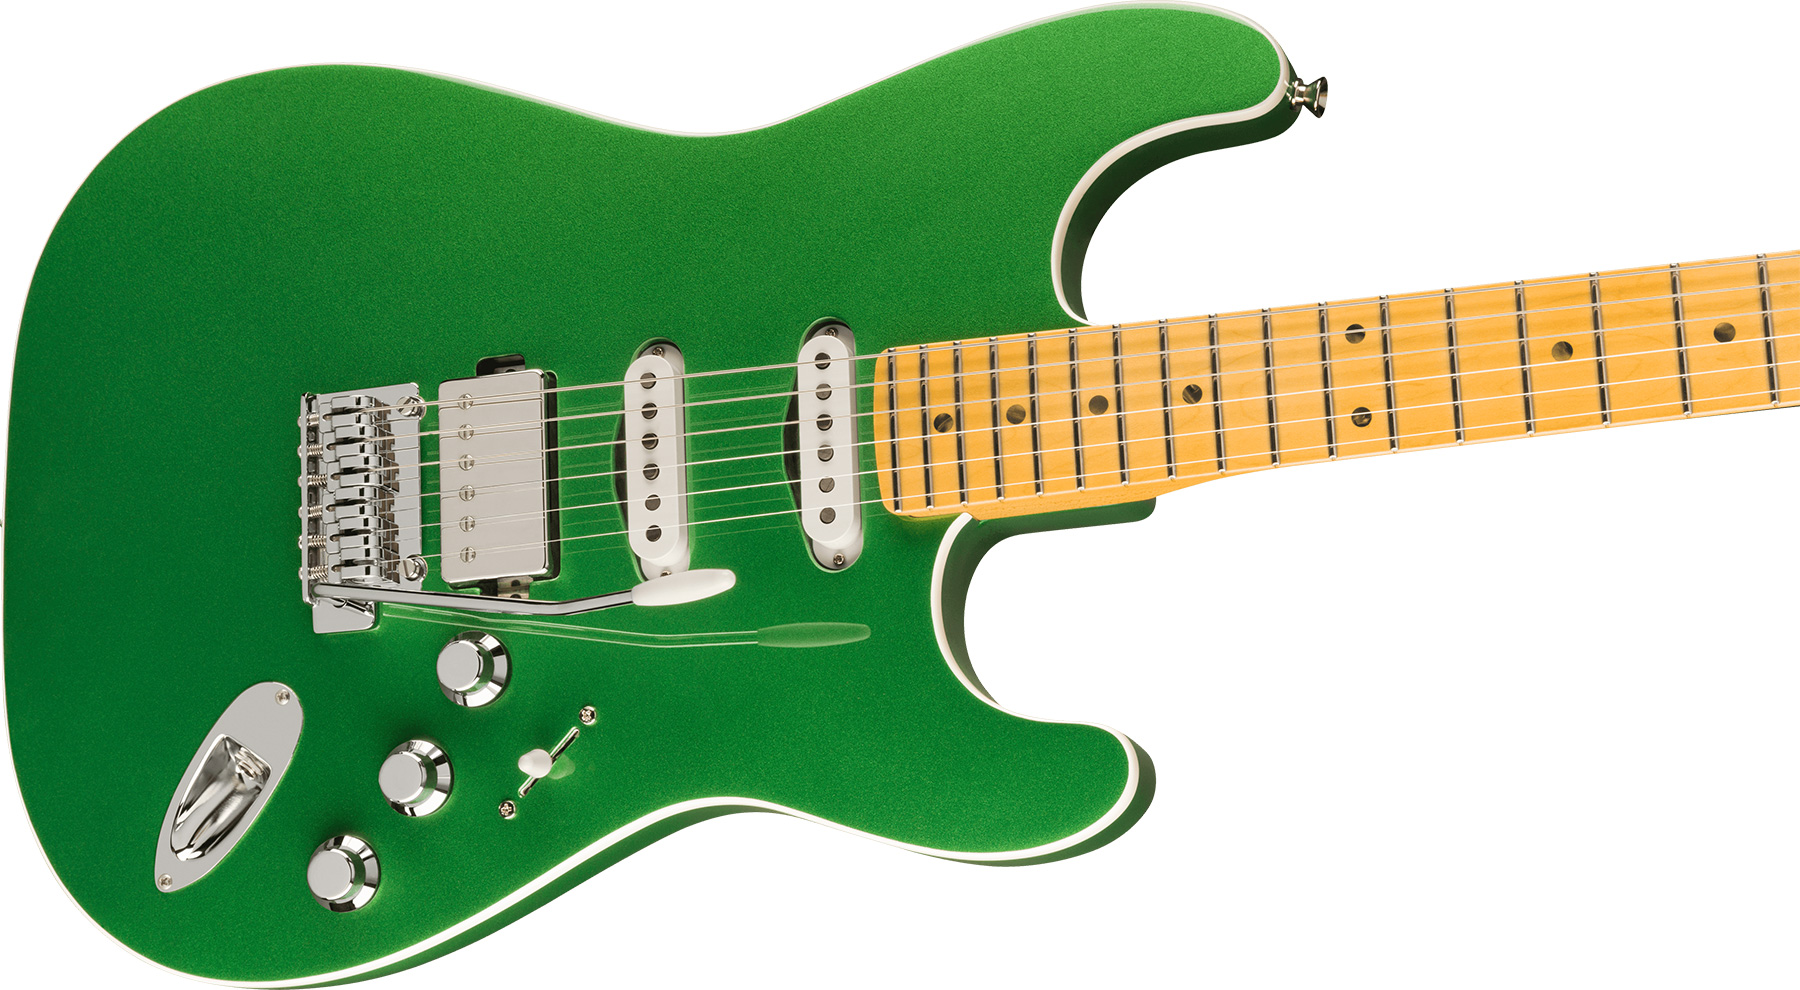 Fender Strat Aerodyne Special Jap Trem Hss Mn - Speed Green Metallic - Str shape electric guitar - Variation 2